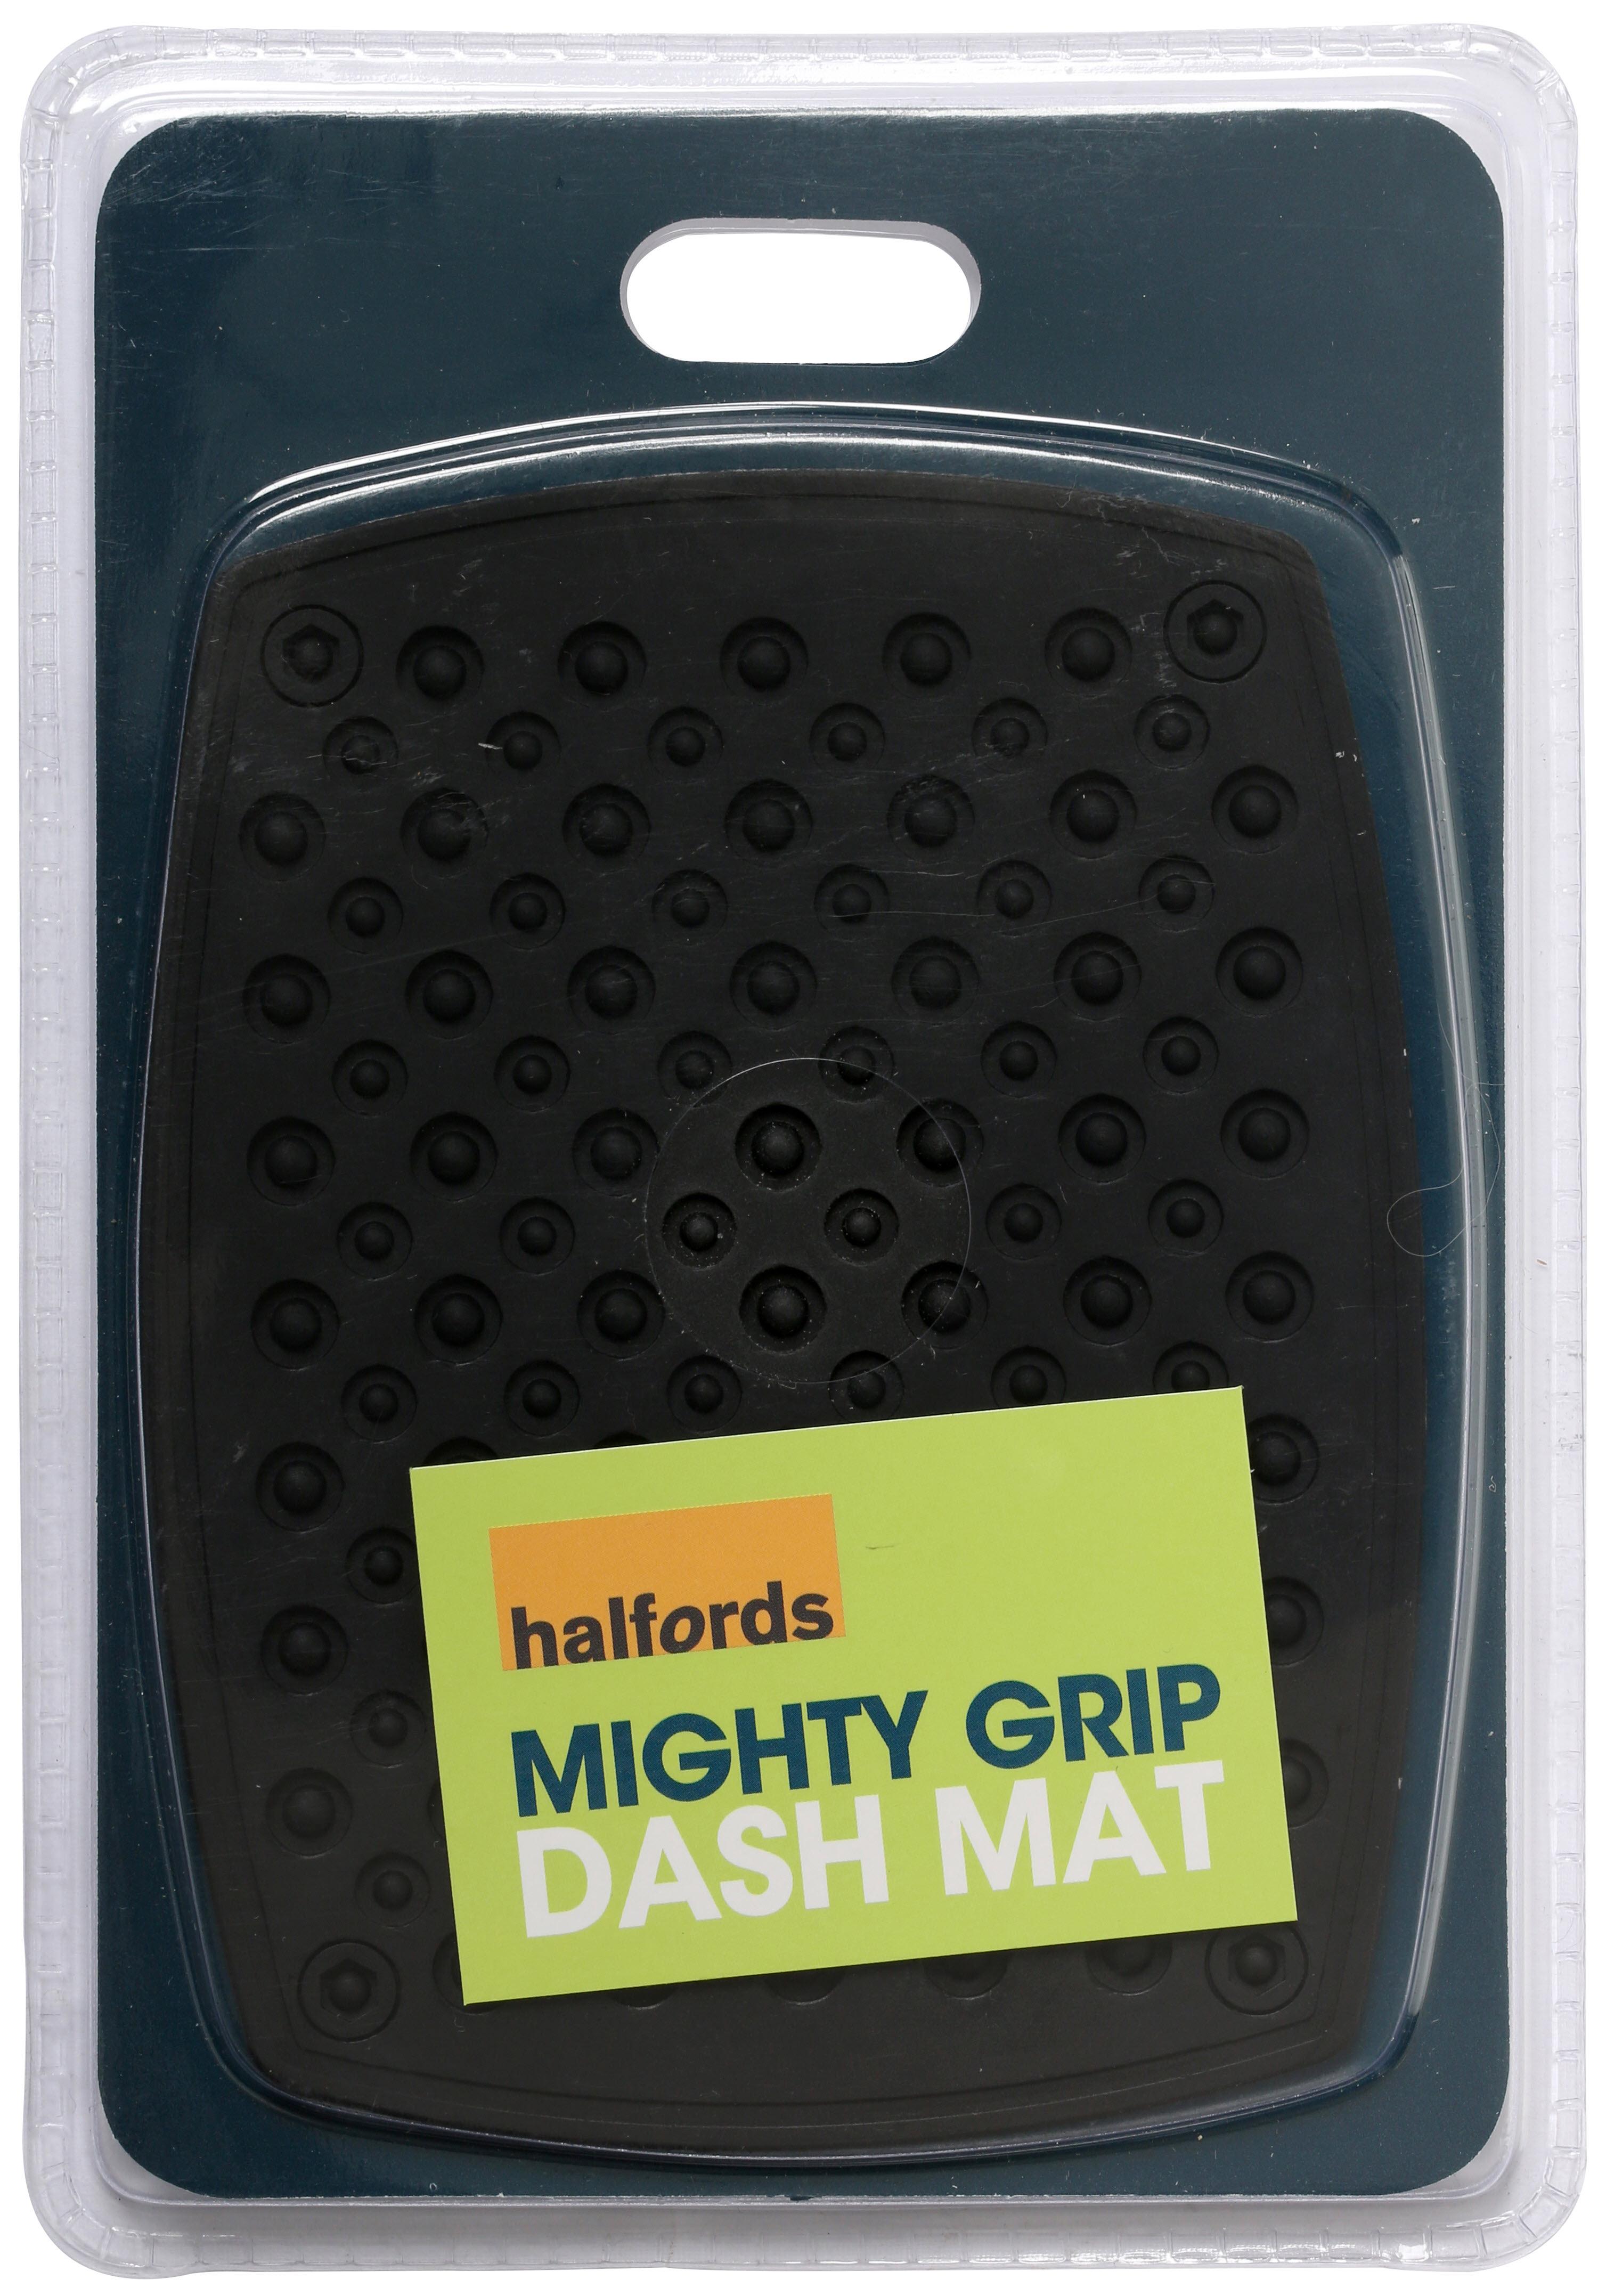 Halfords Mighty Grip Dash Mat